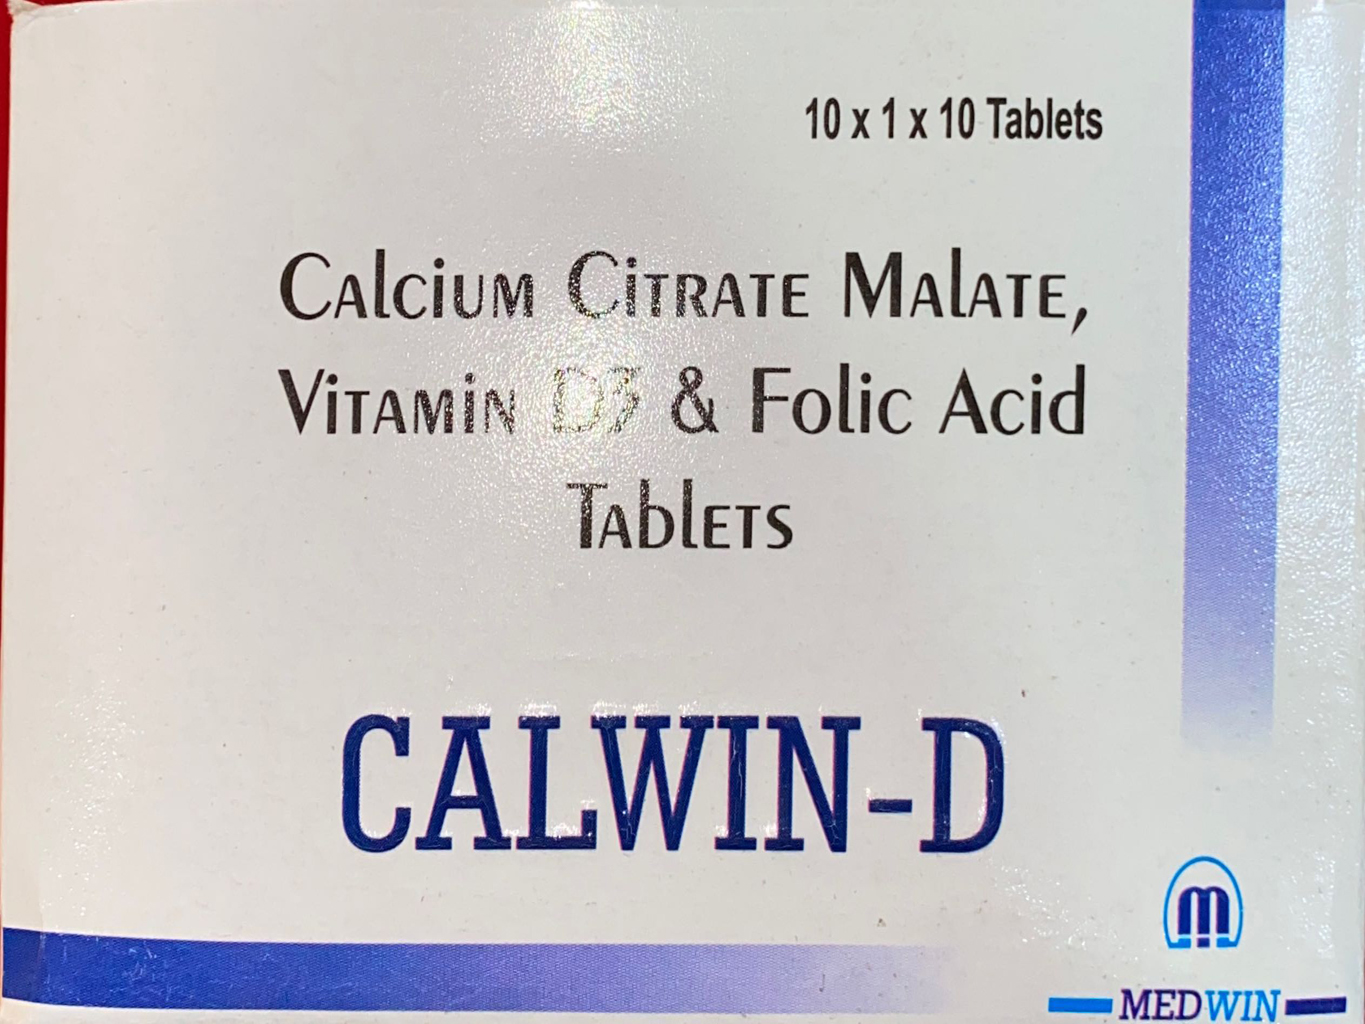 Medwin Pharmaceuticals